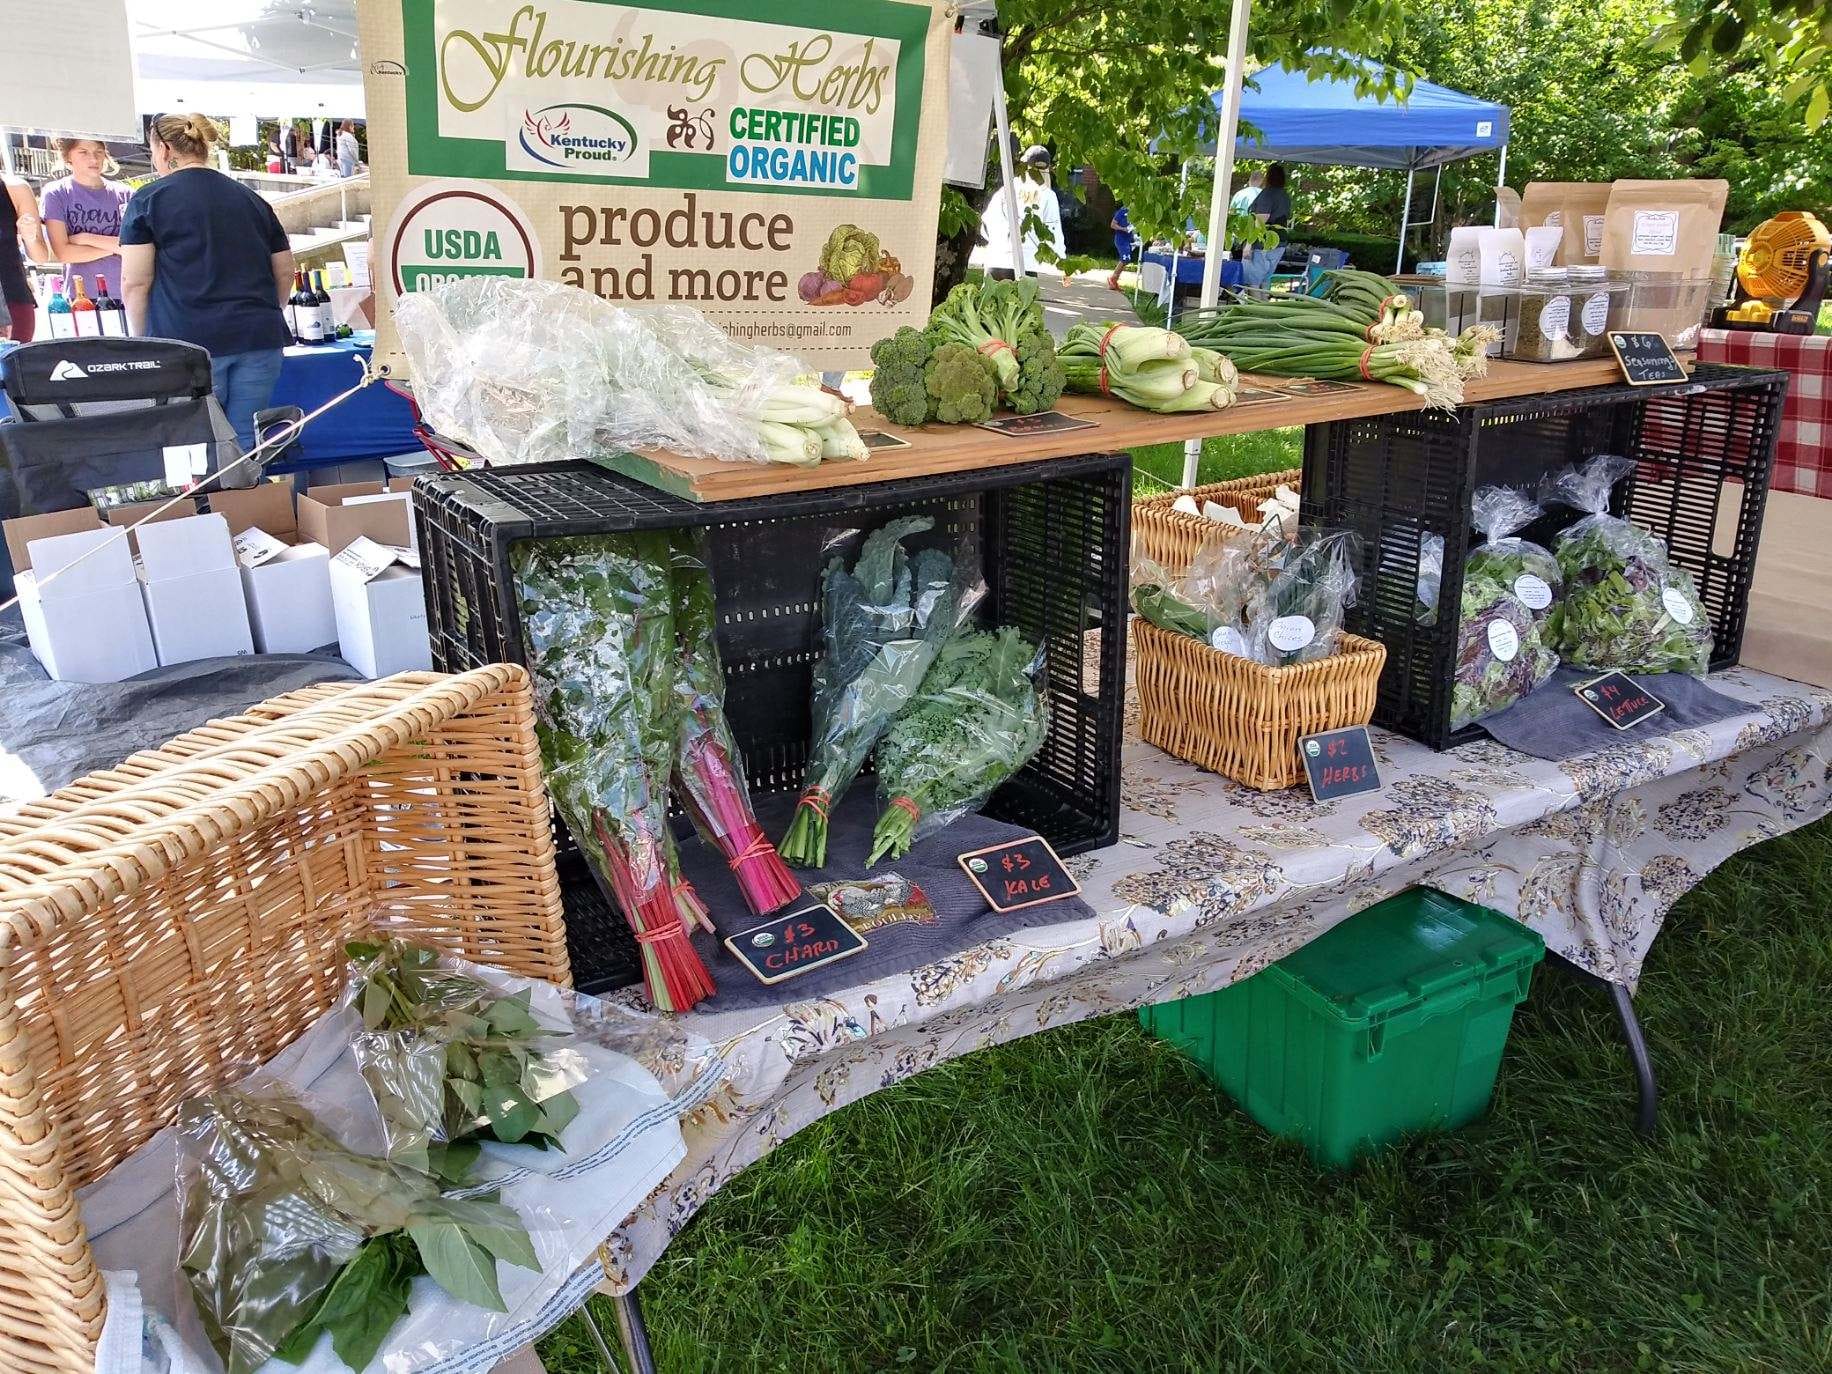 full farmers market table display from Flourishing Herbs Farm